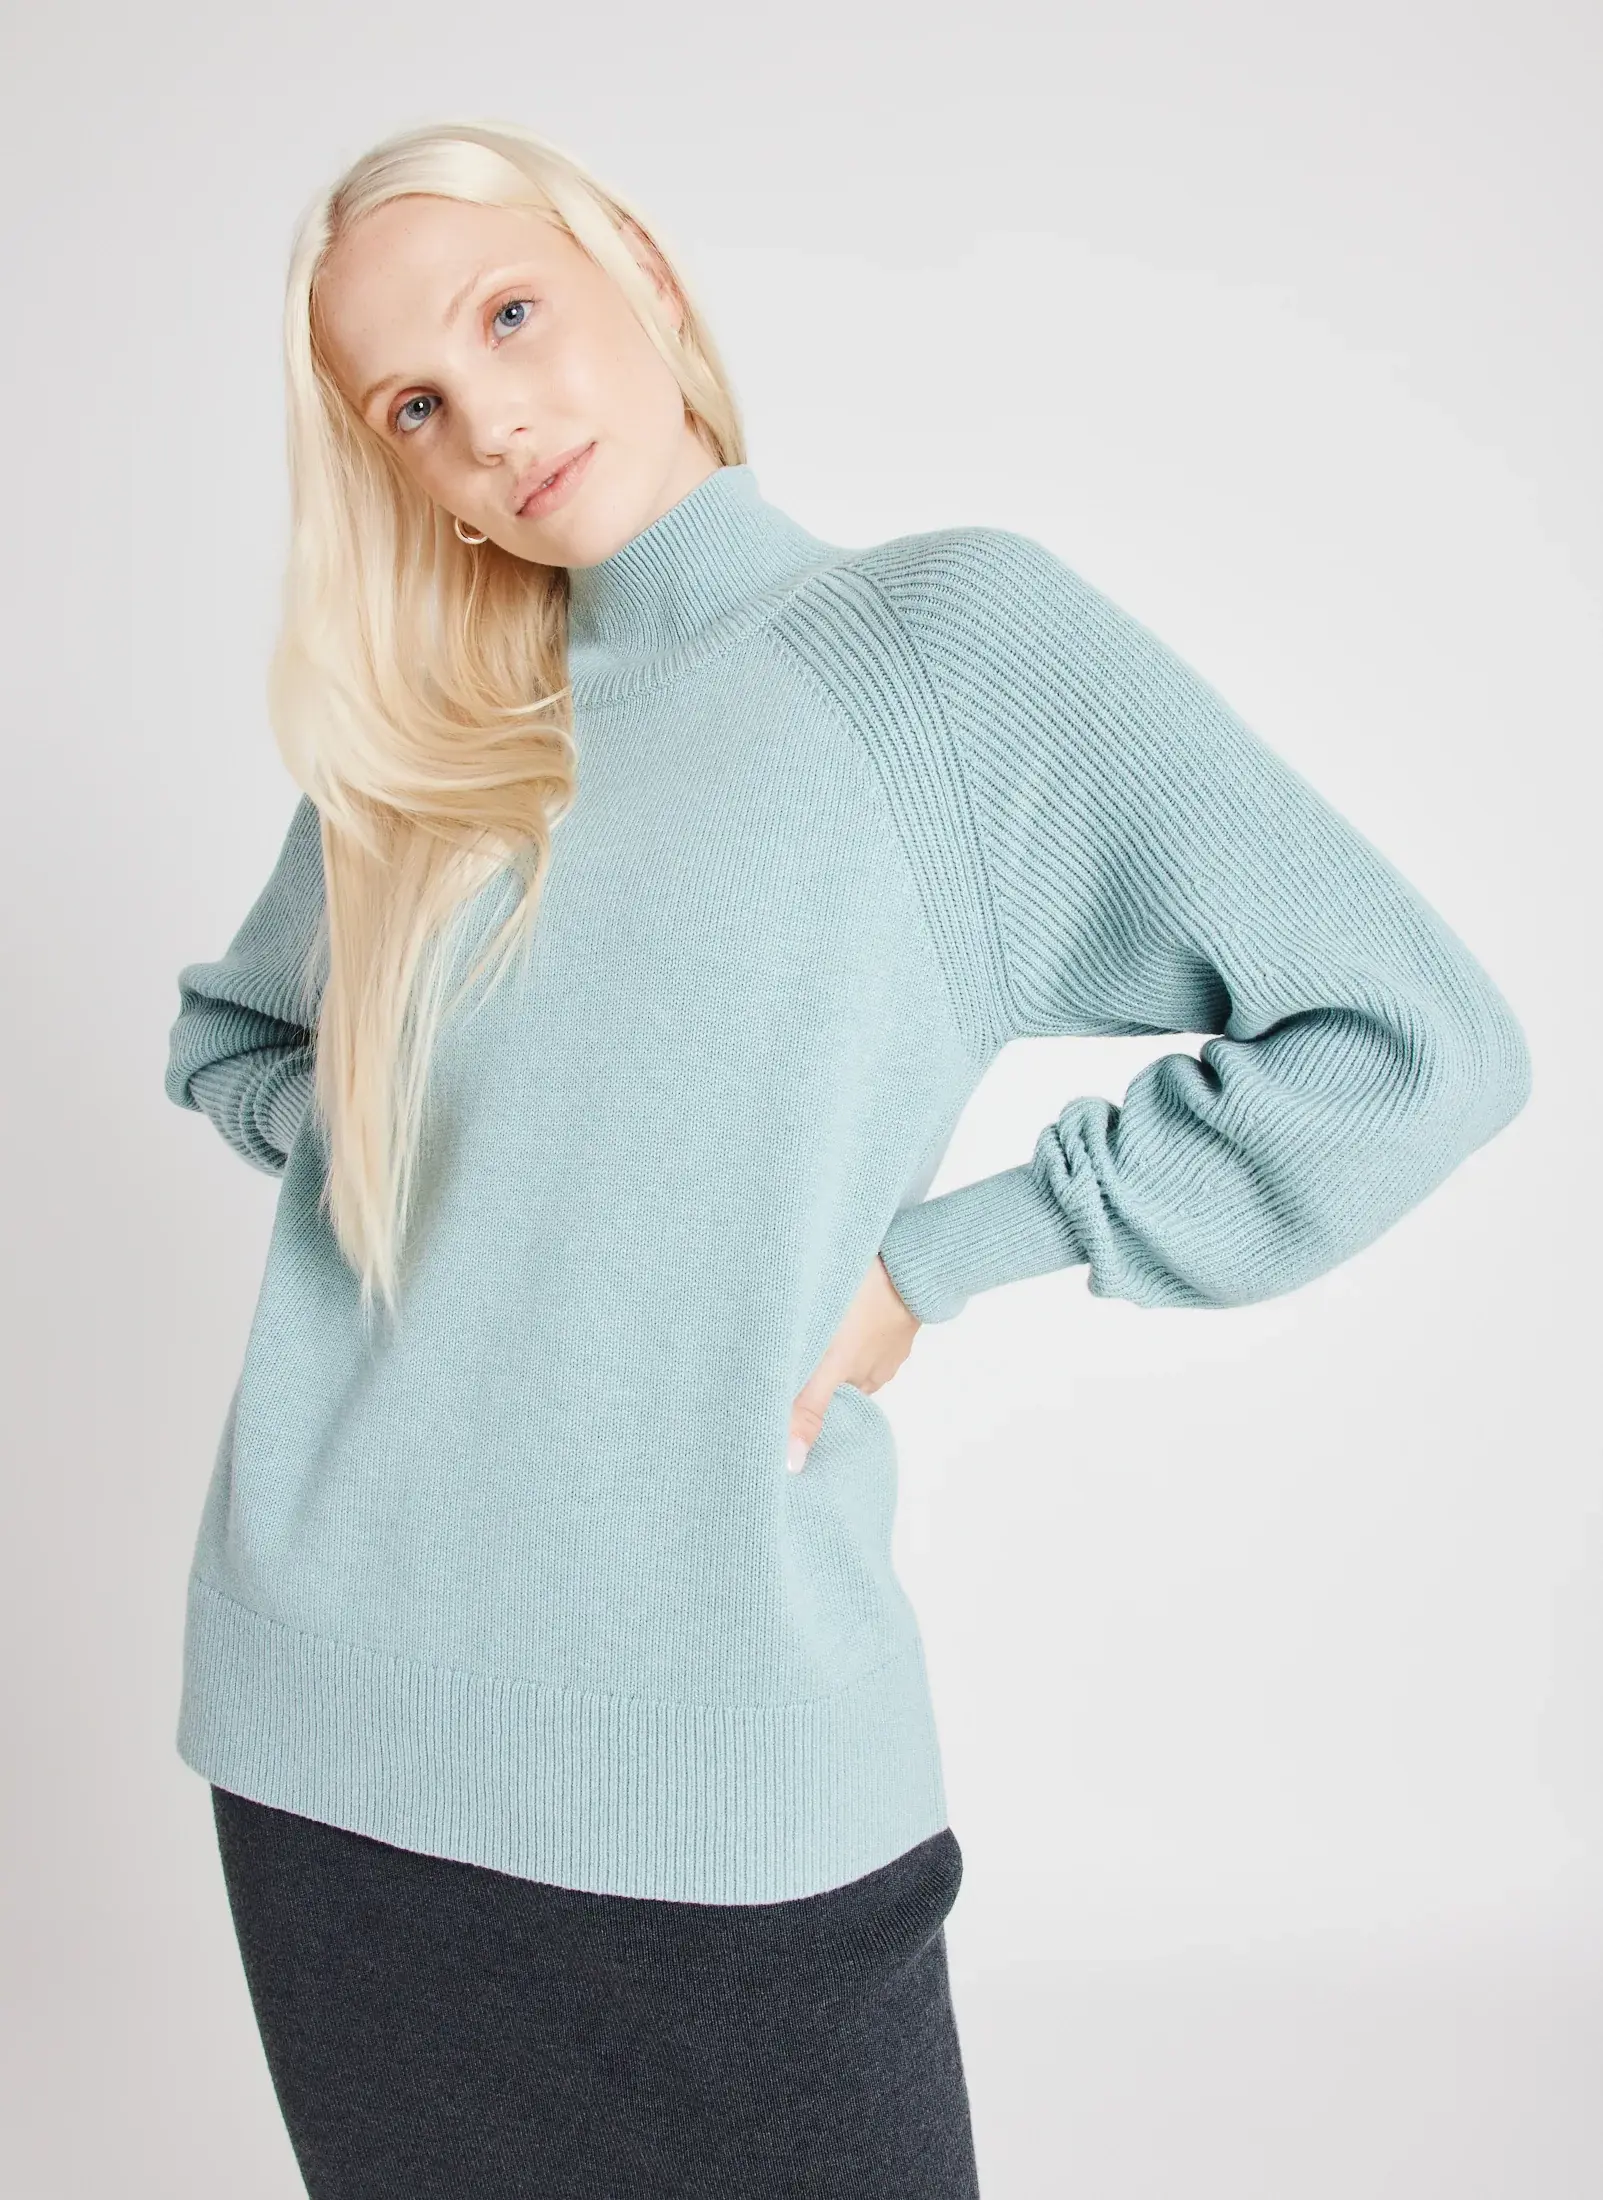 Kit And Ace Sophia Merino Turtleneck Sweater. 1